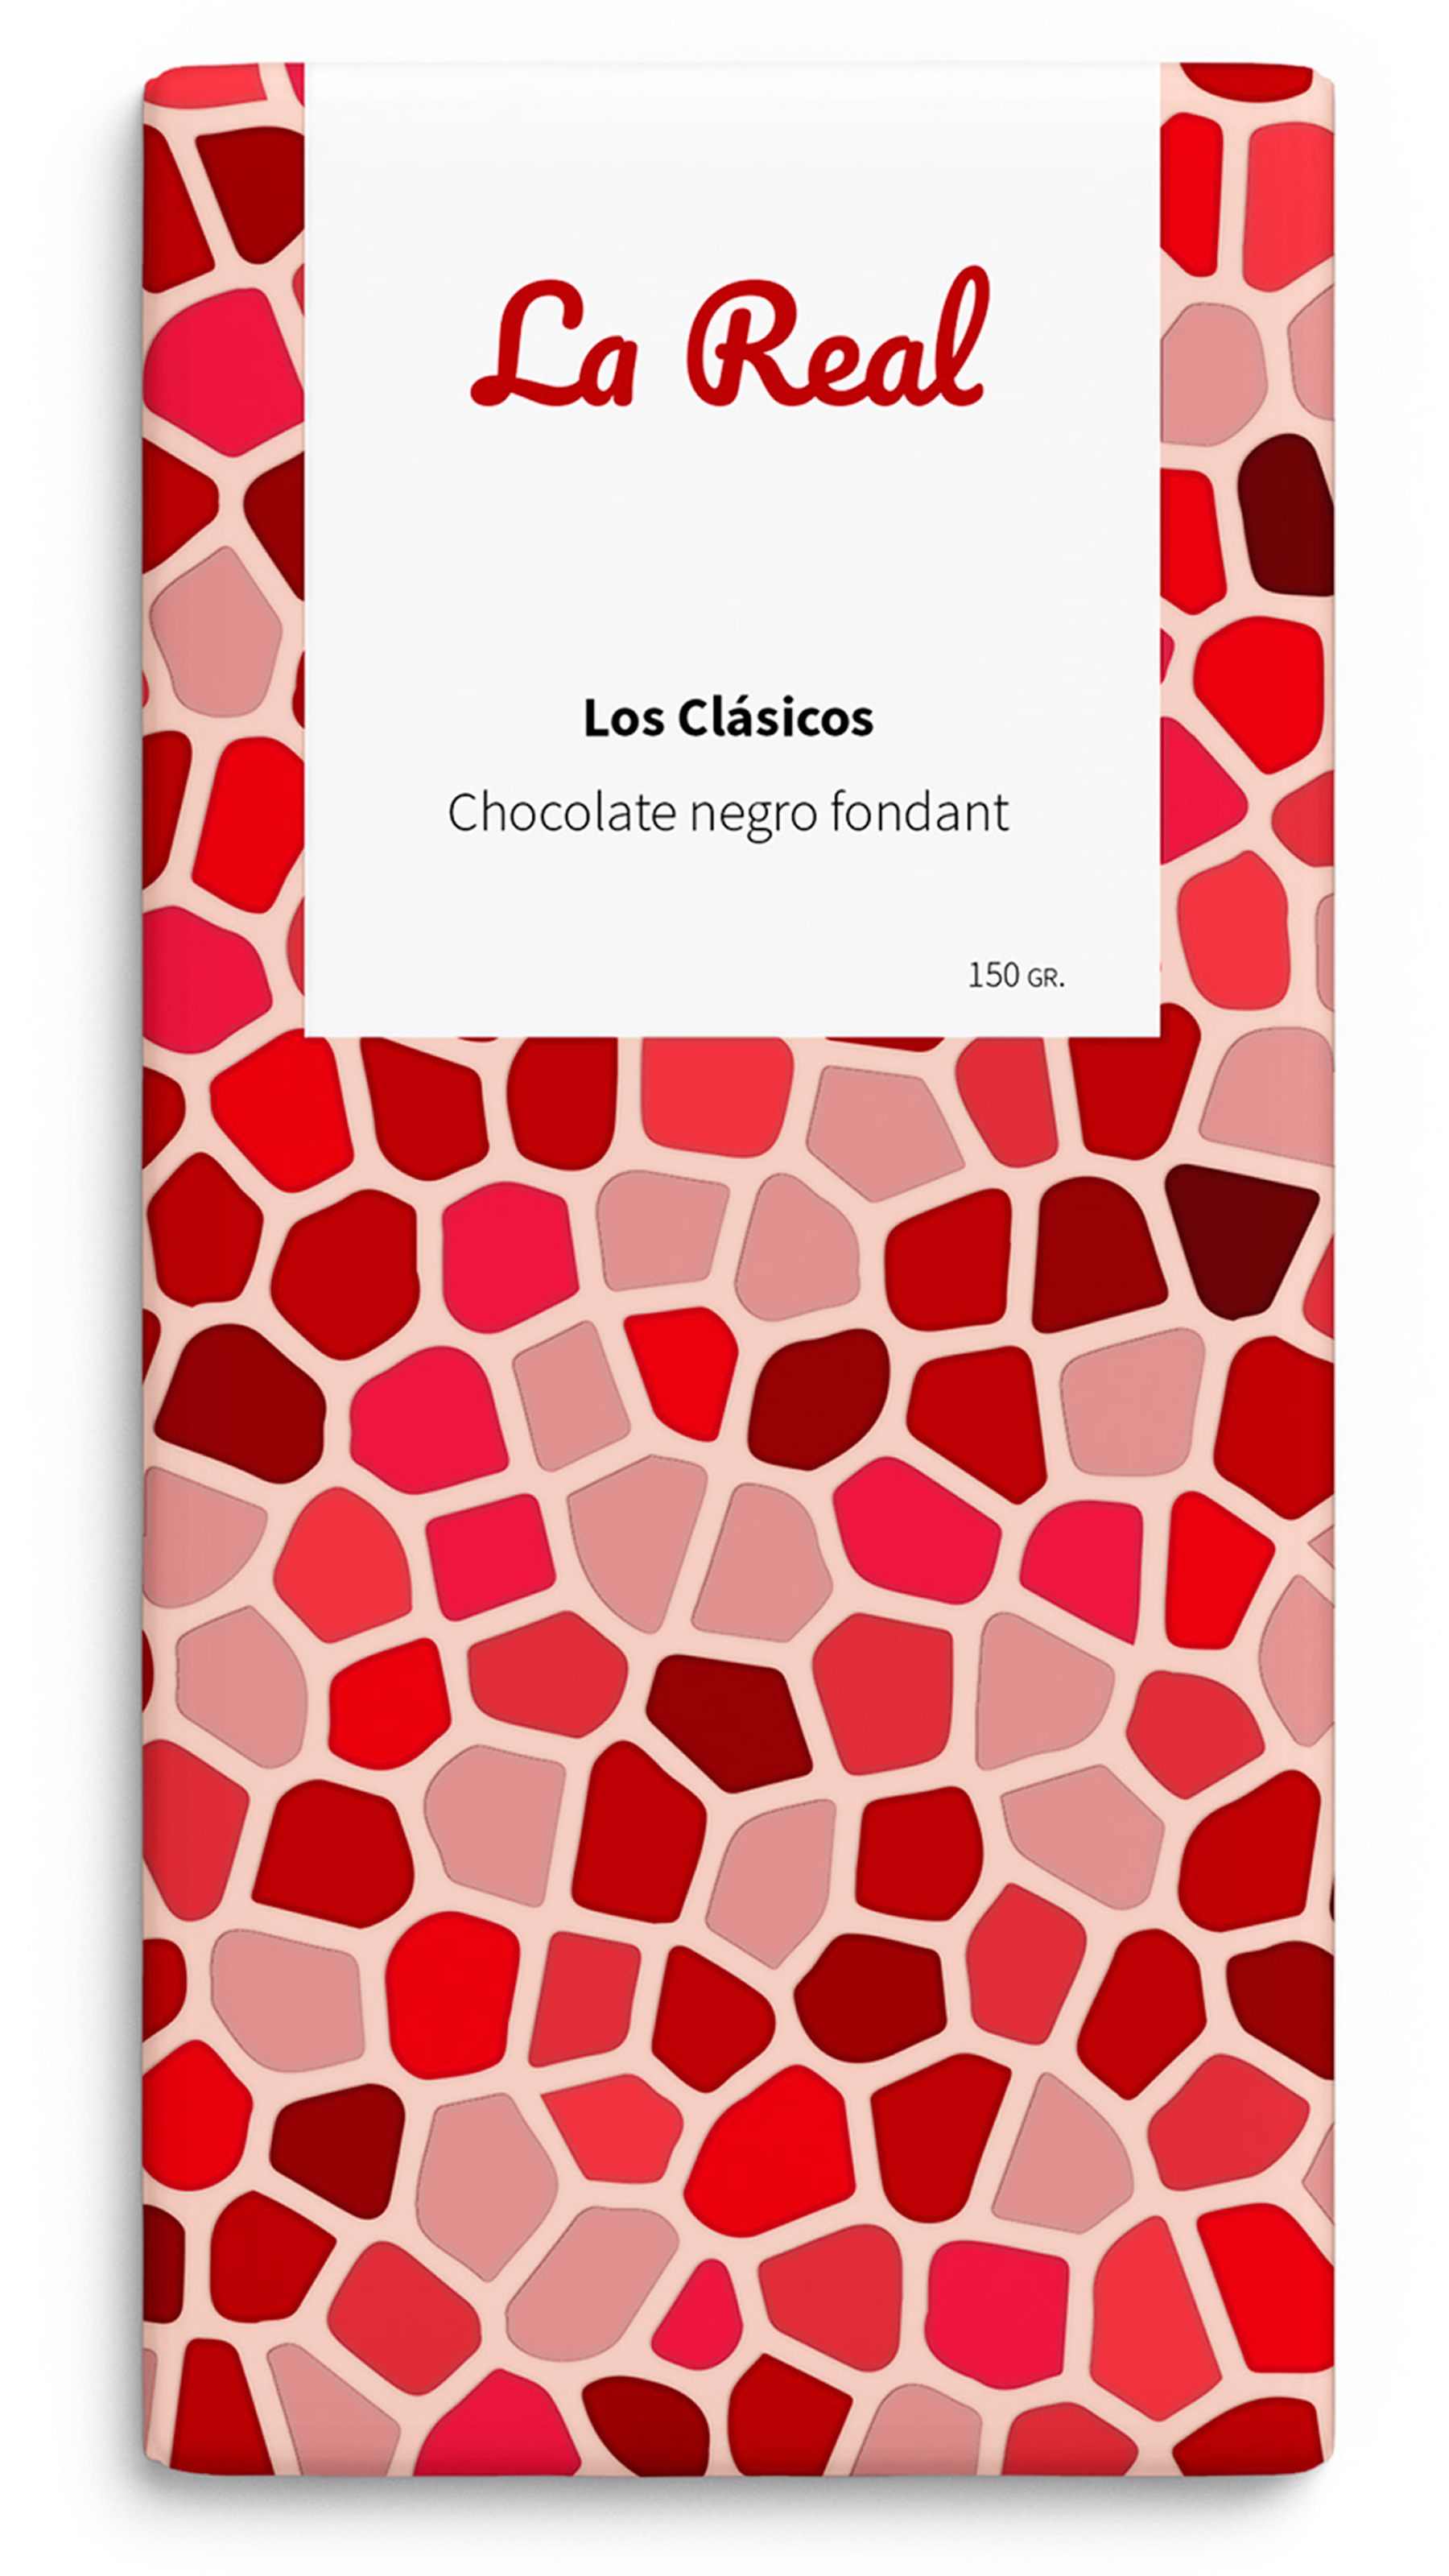 Chocolates La Real by Carla Fraga Poza - Creative Work - $i